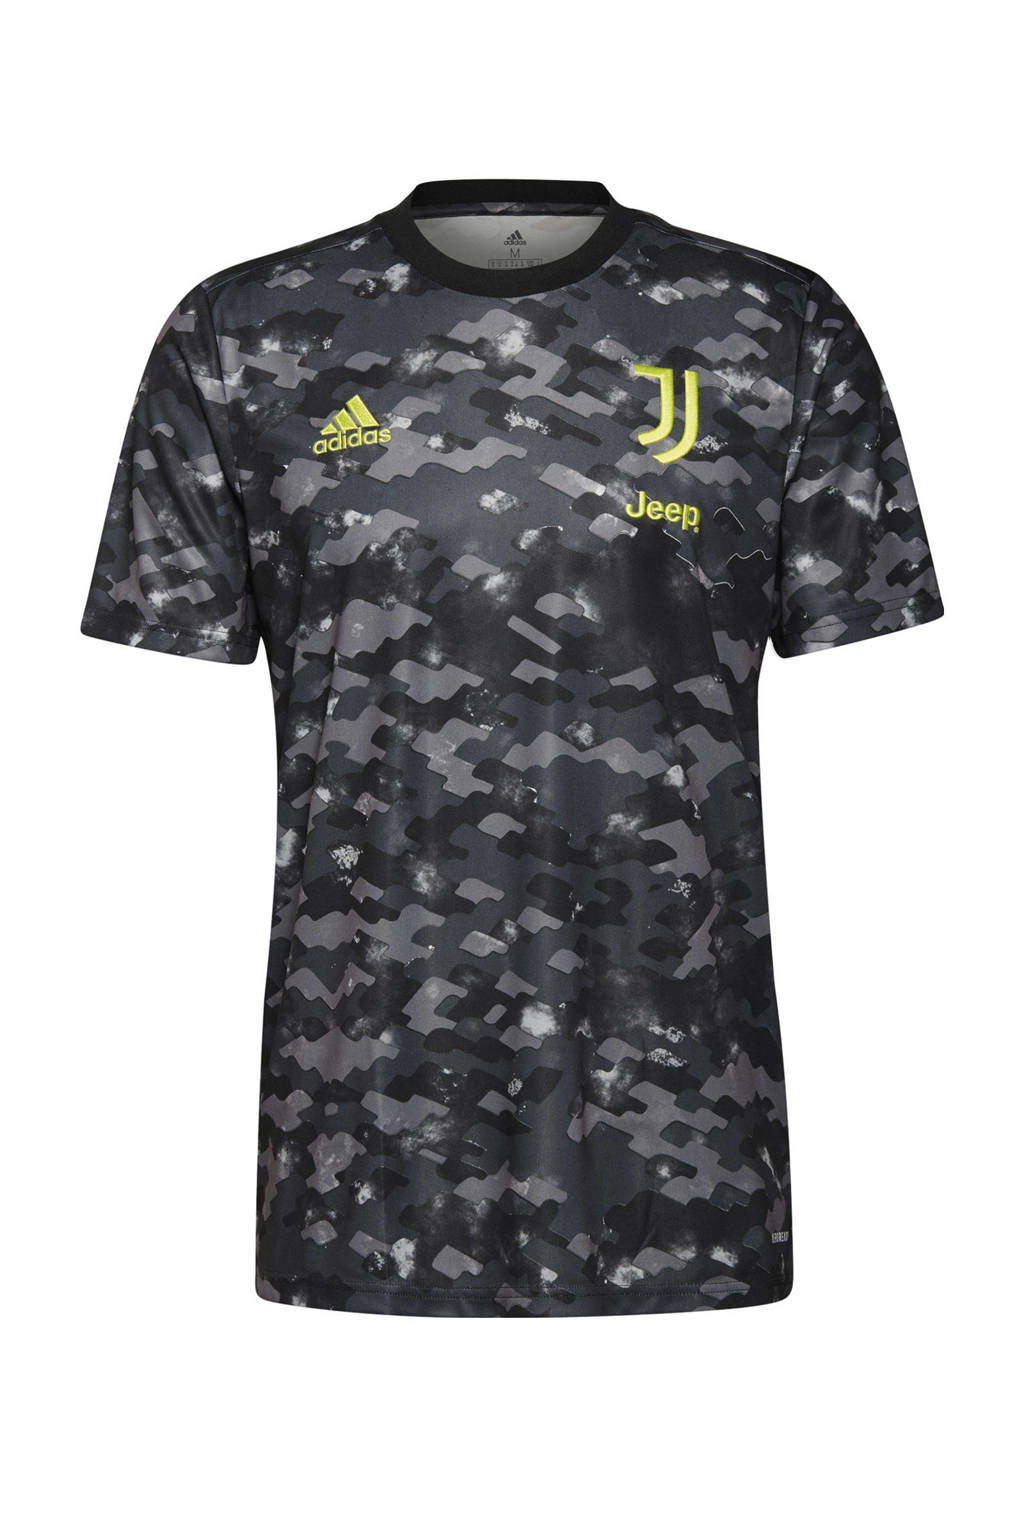 adidas Performance Senior Juventus FC presentatie shirt, Grijs/zwart